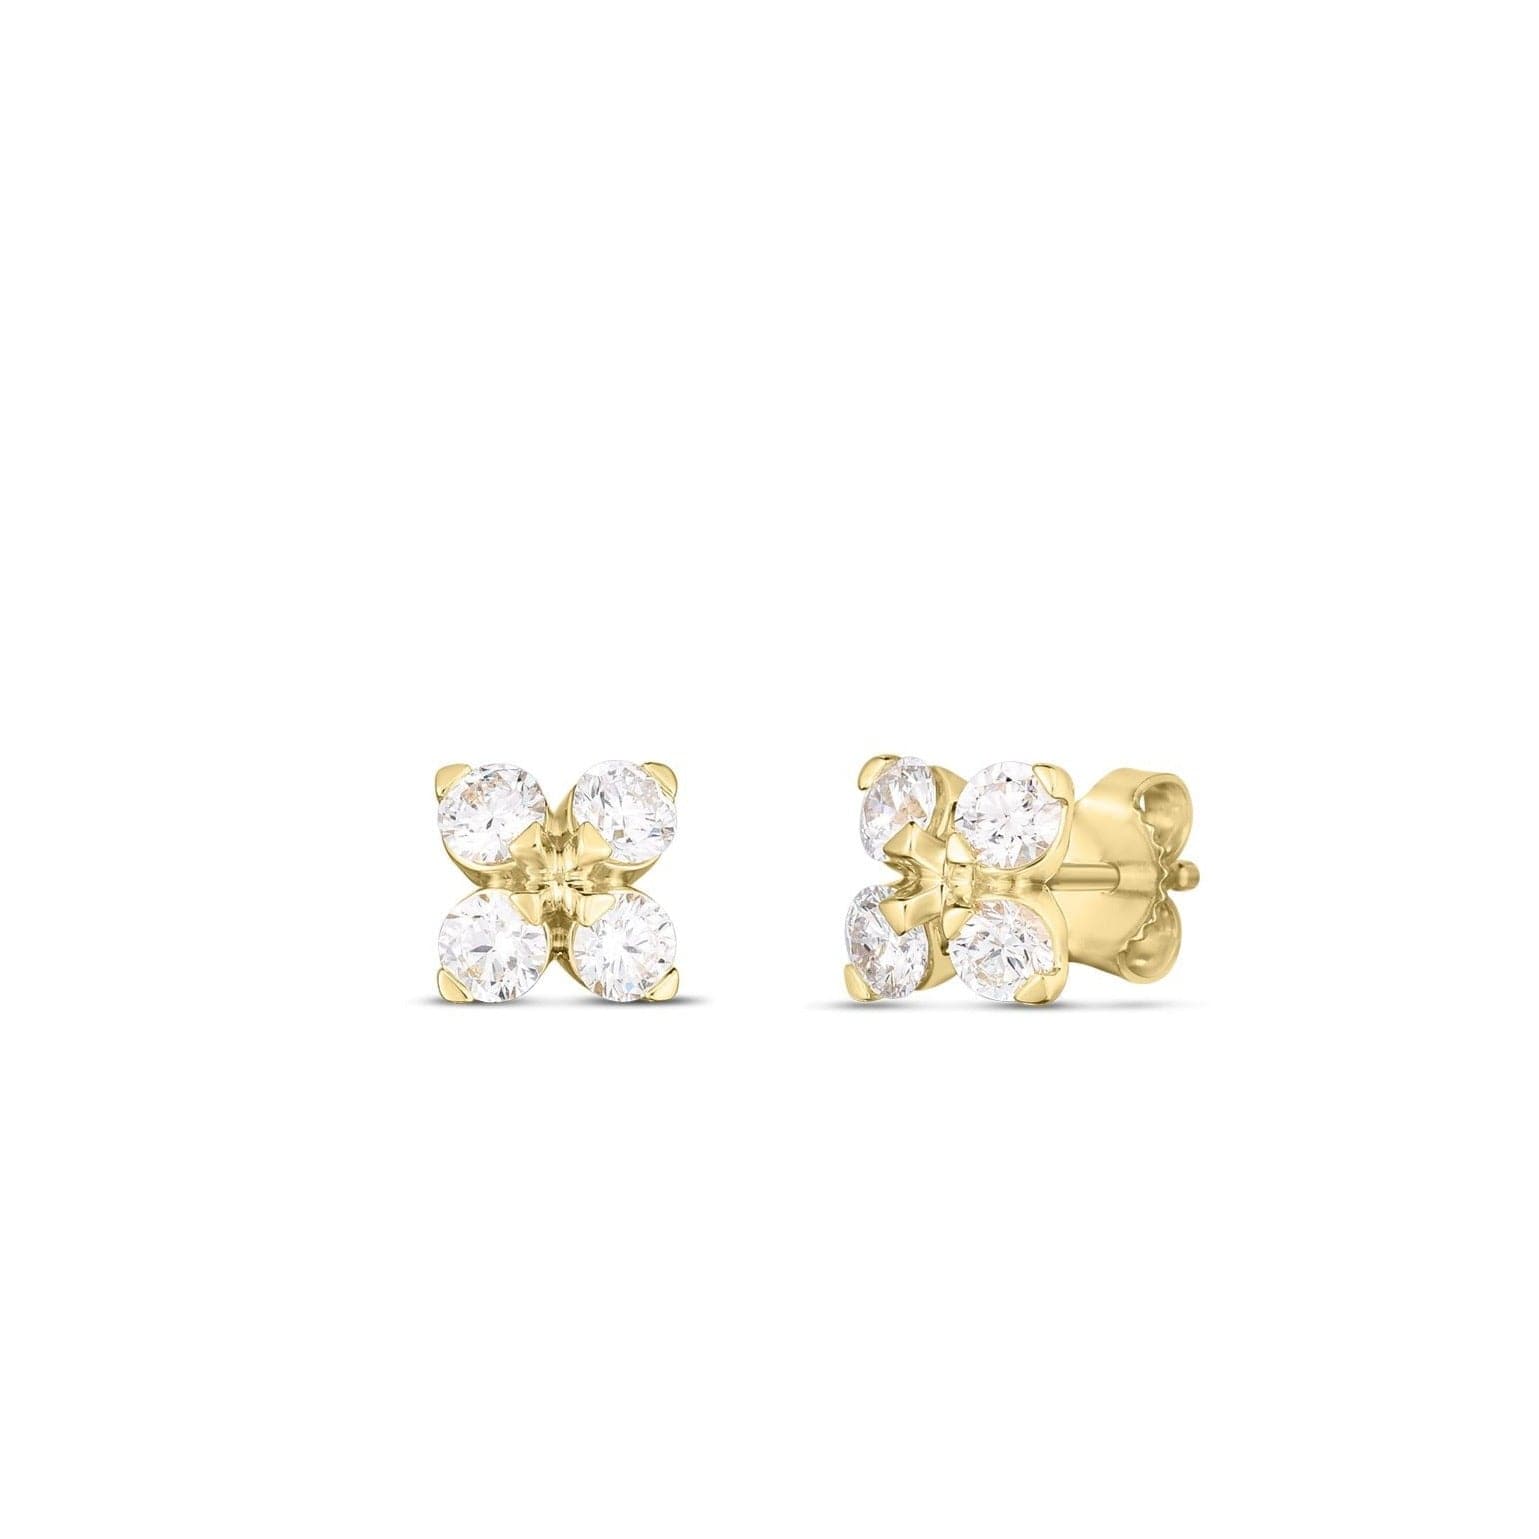 Roberto Coin Earring 18K Yellow Gold Diamond Flower Stud Earrings